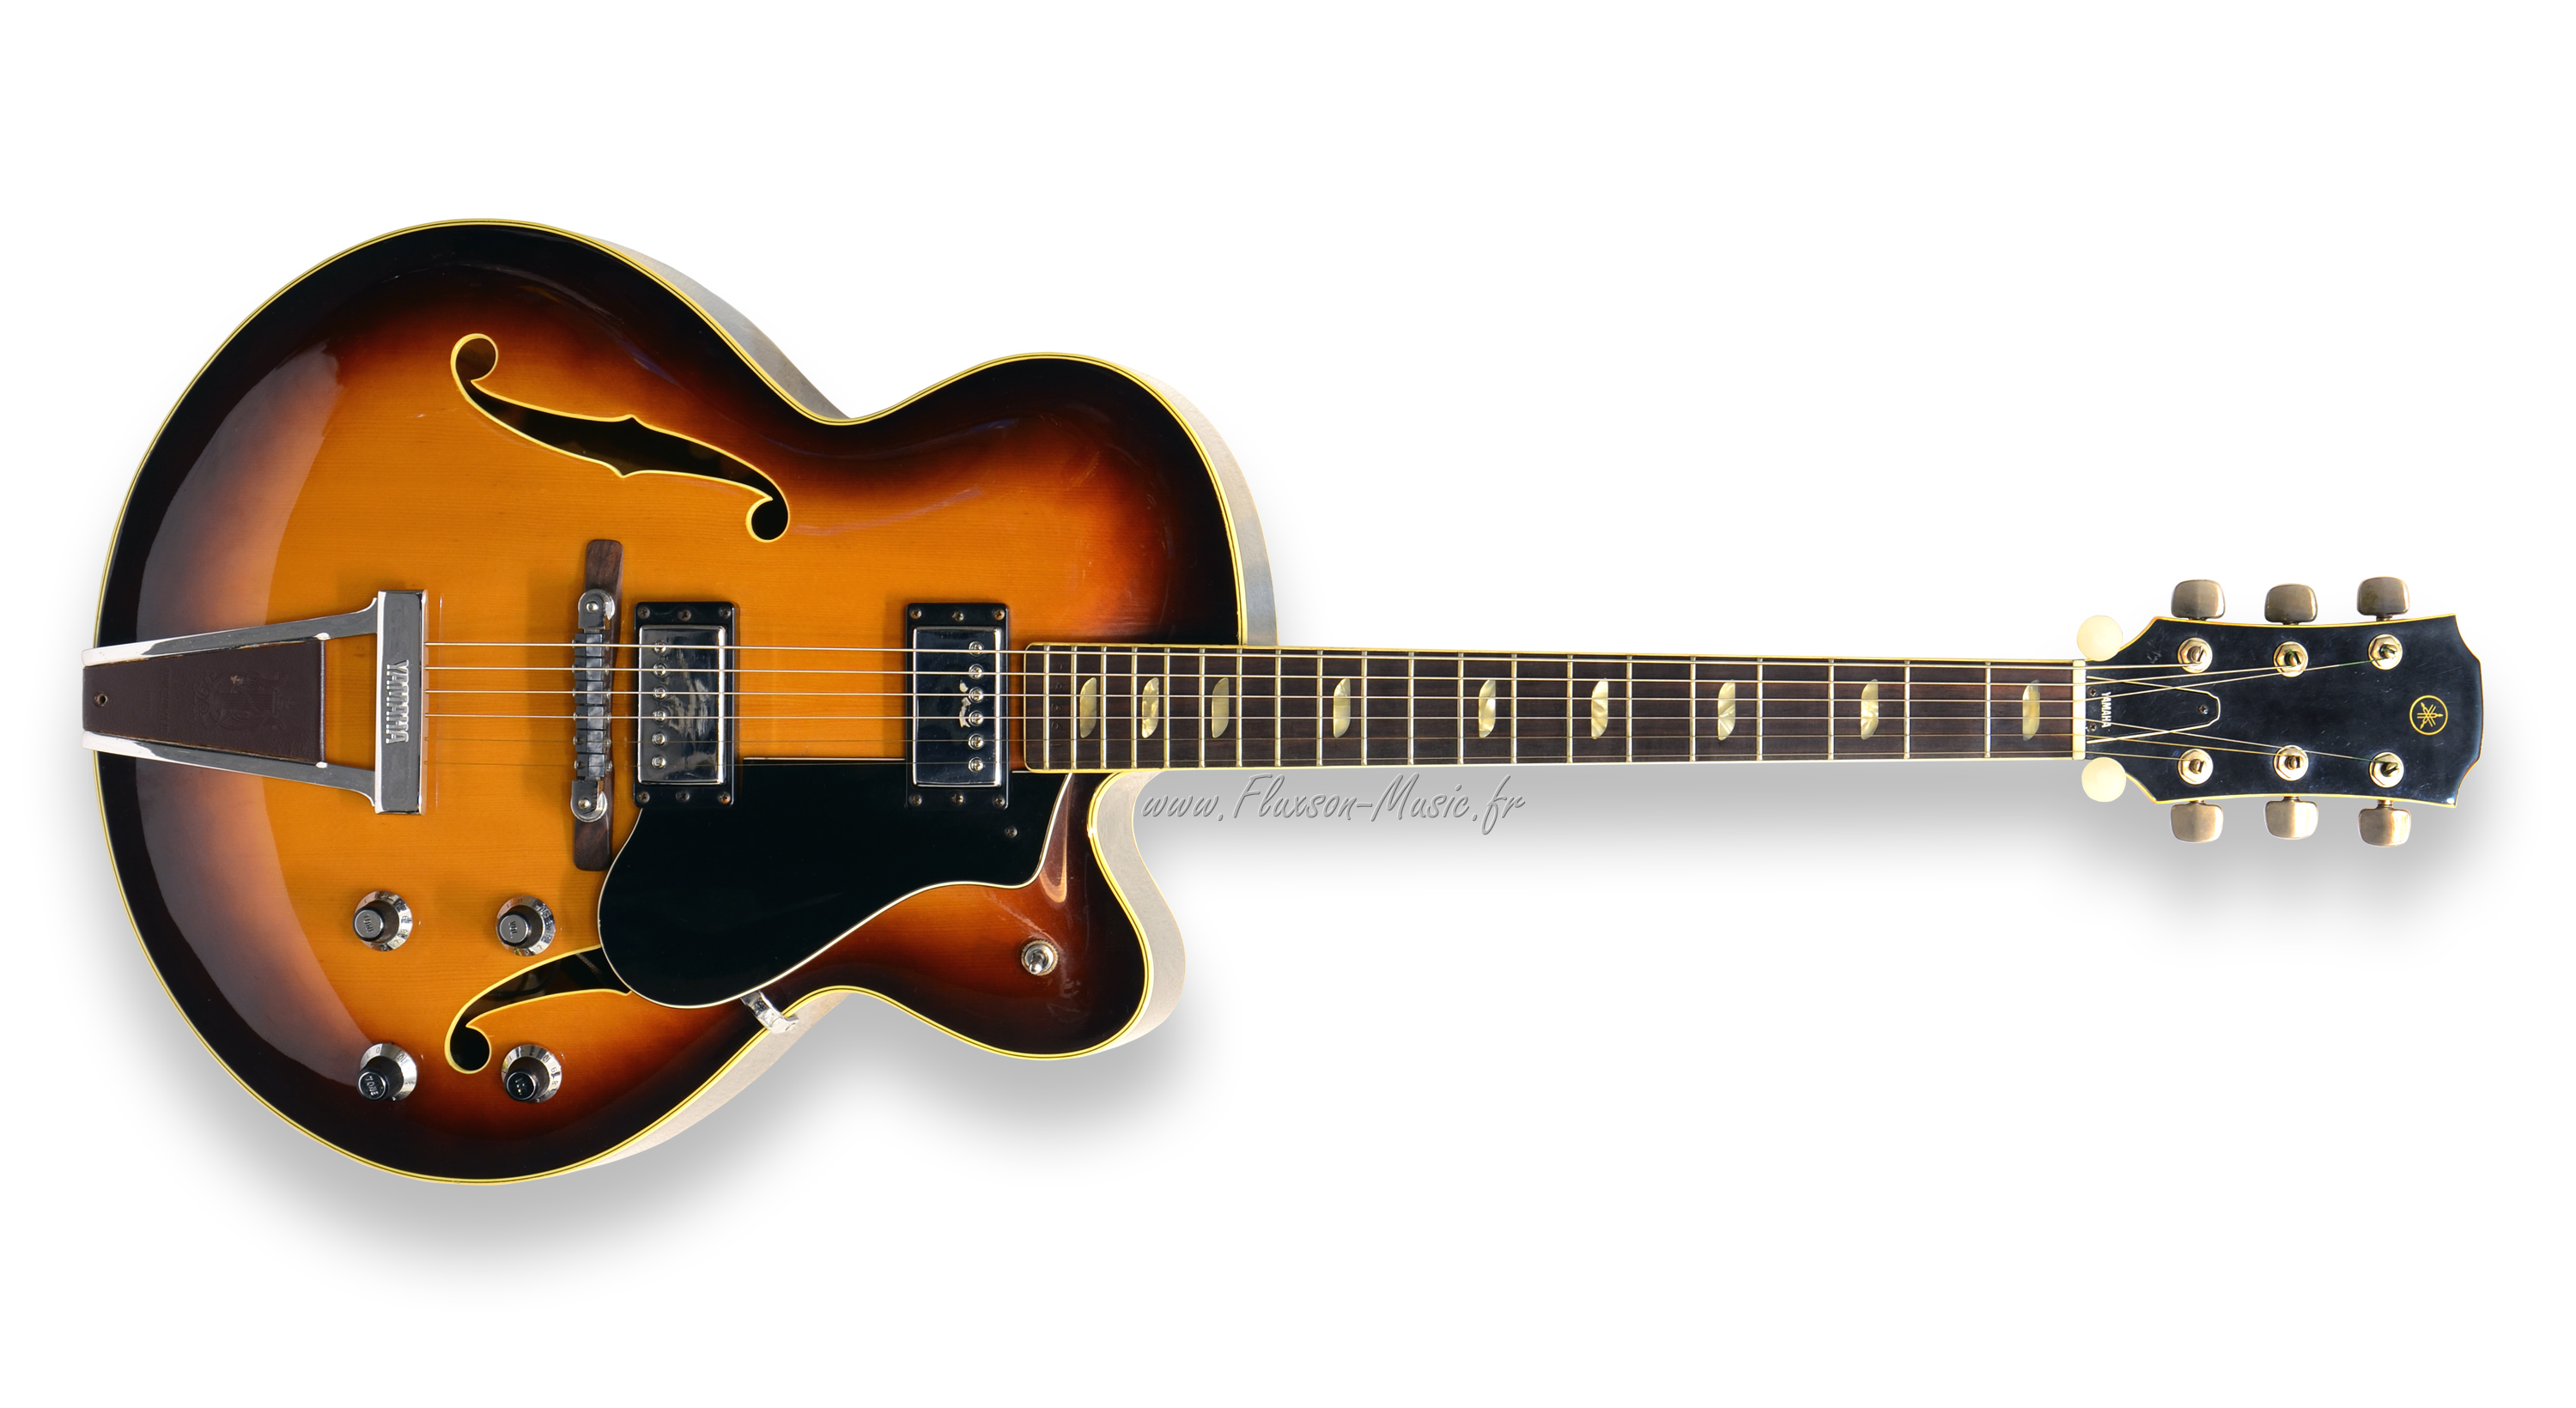 Yamaha AE12 1974 Guitar For Sale Fluxson Music